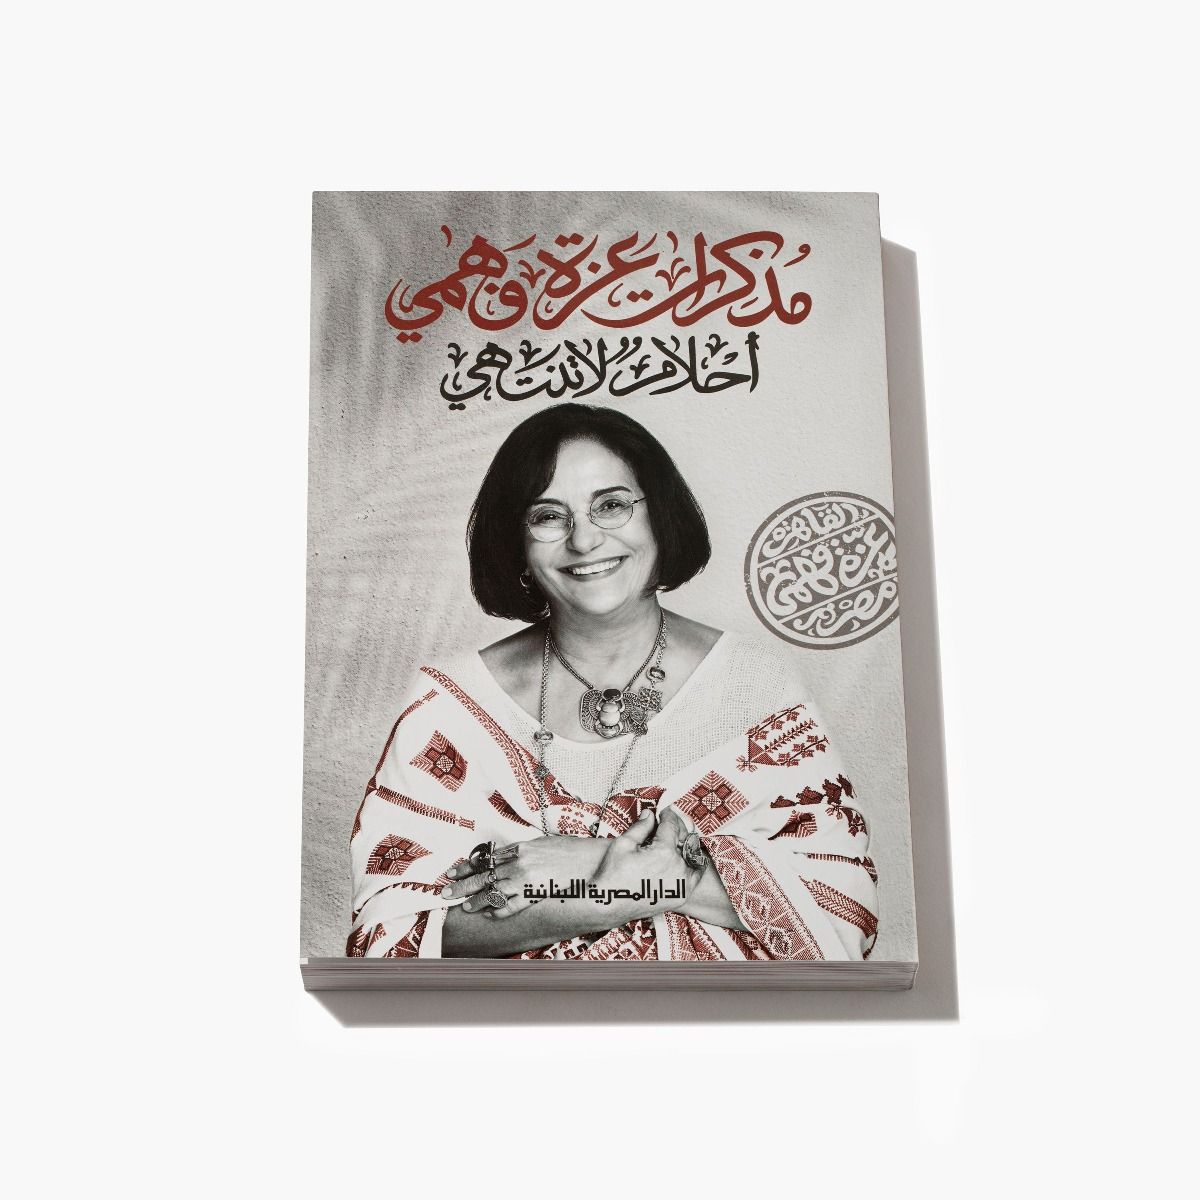 ’أحلام لا تنتهي’ - Azza Fahmy’s Autobiography